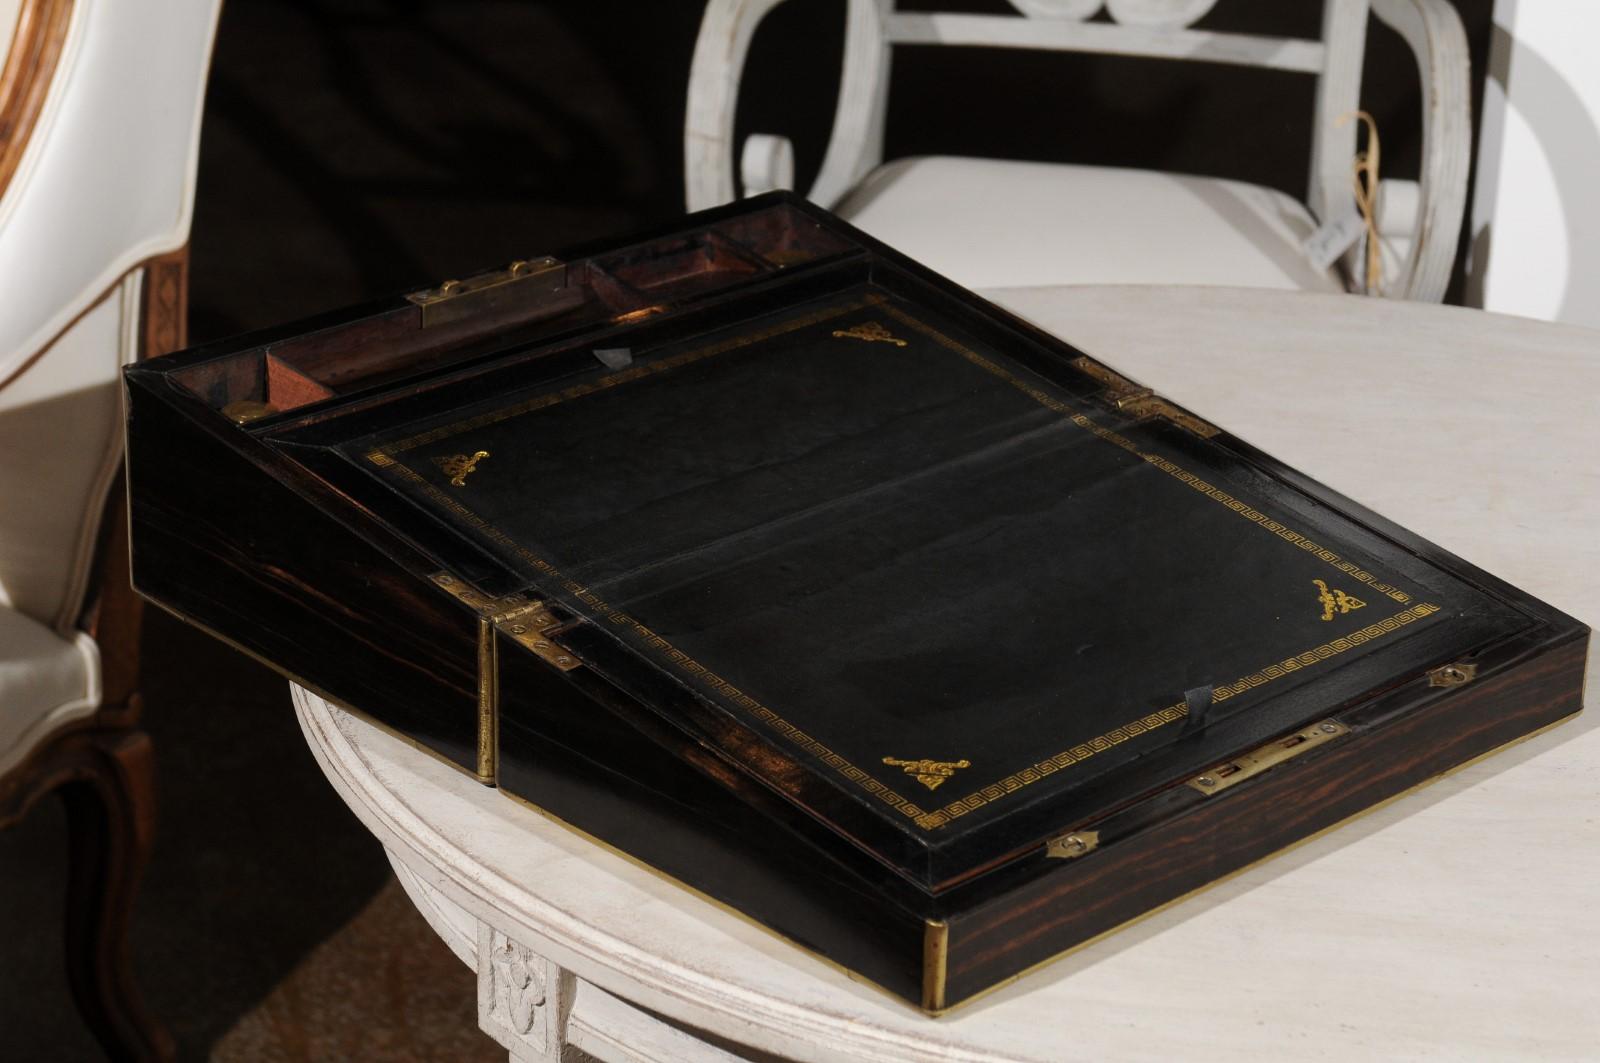 Wood Coromandel 19th Century Brass-Bound Campaign Slope Desk with Secret Drawers